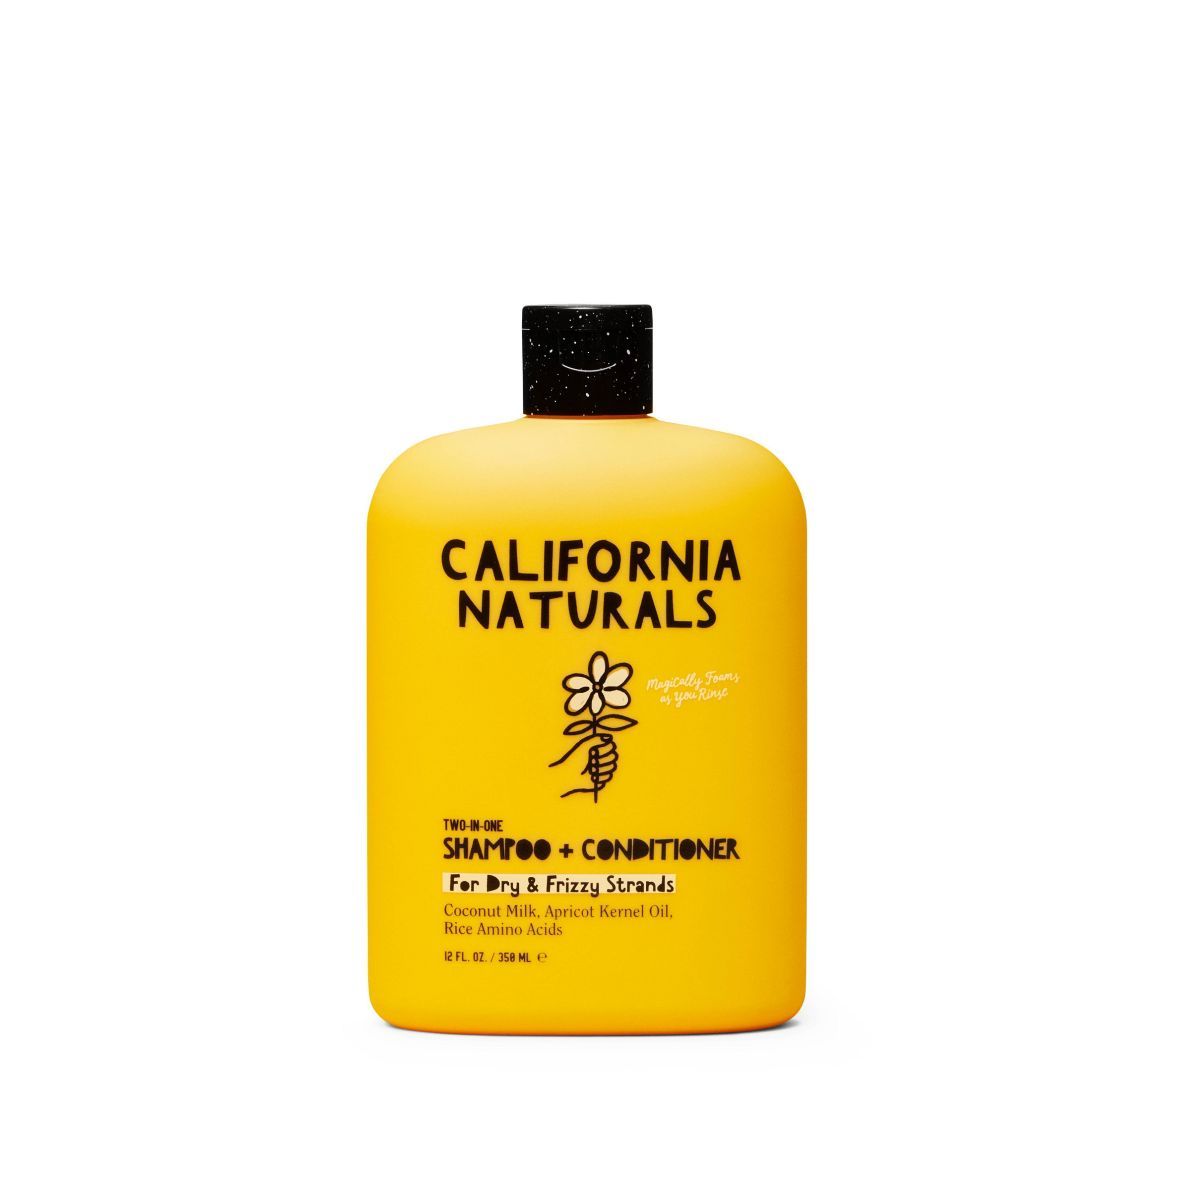 California Naturals 2-in-1 Shampoo + Conditioner – 12 fl oz | Target